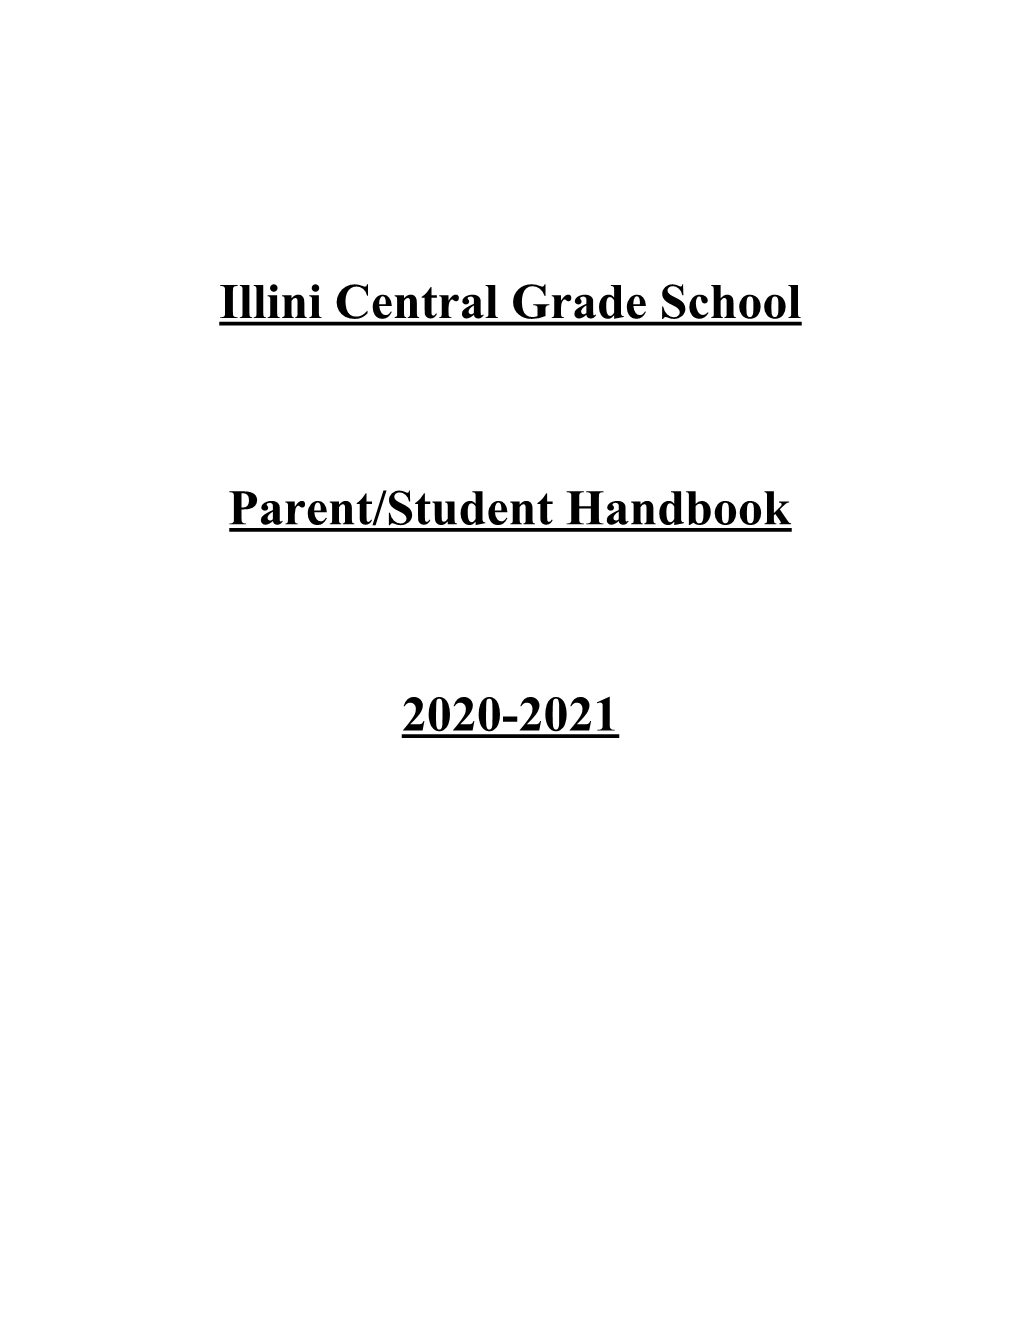 Illini Central Grade School Parent/Student Handbook 2020-2021